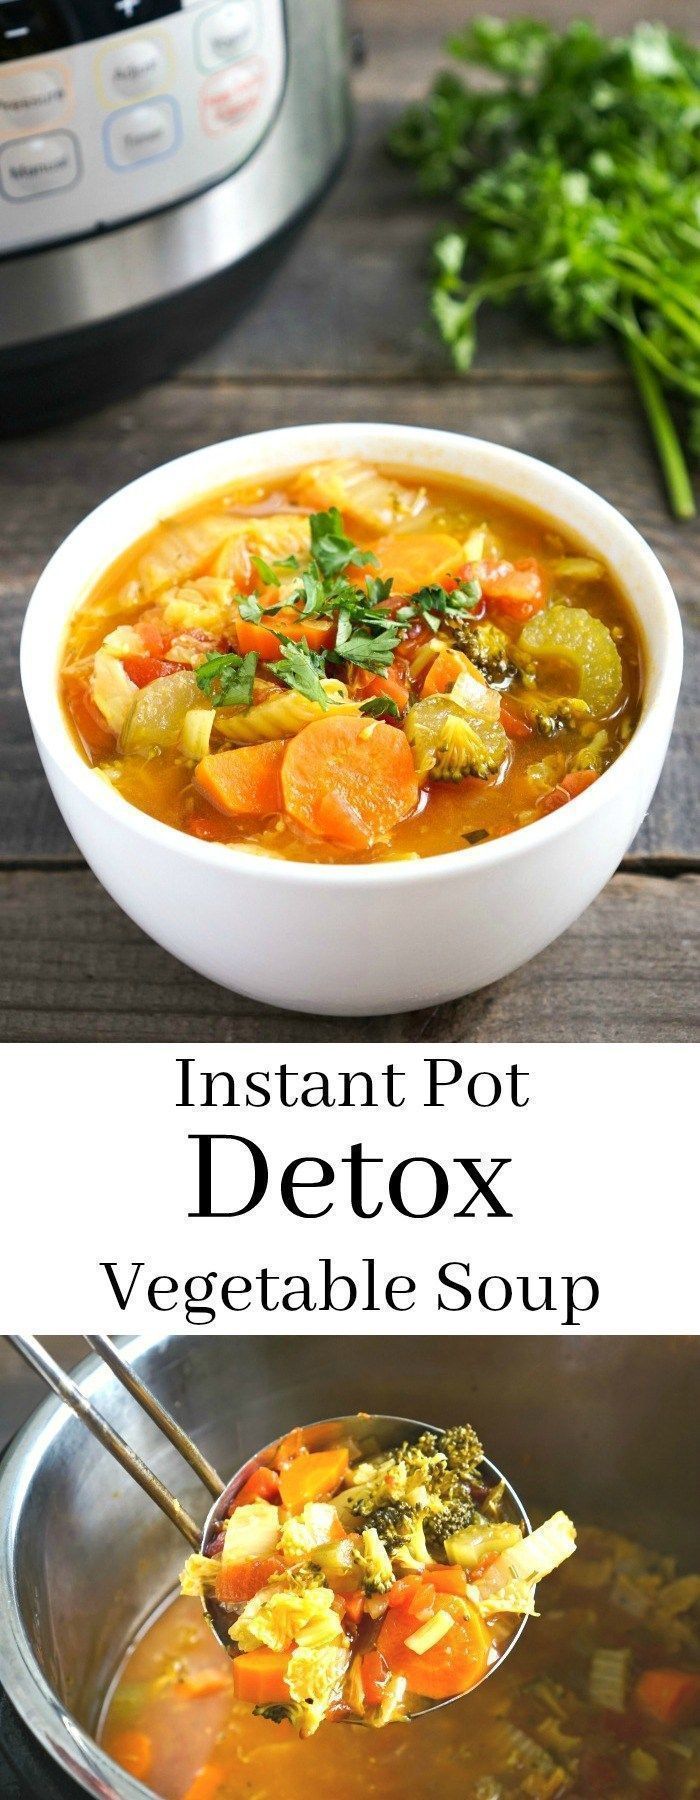 17 healthy instant pot recipes clean eating vegetarian ideas